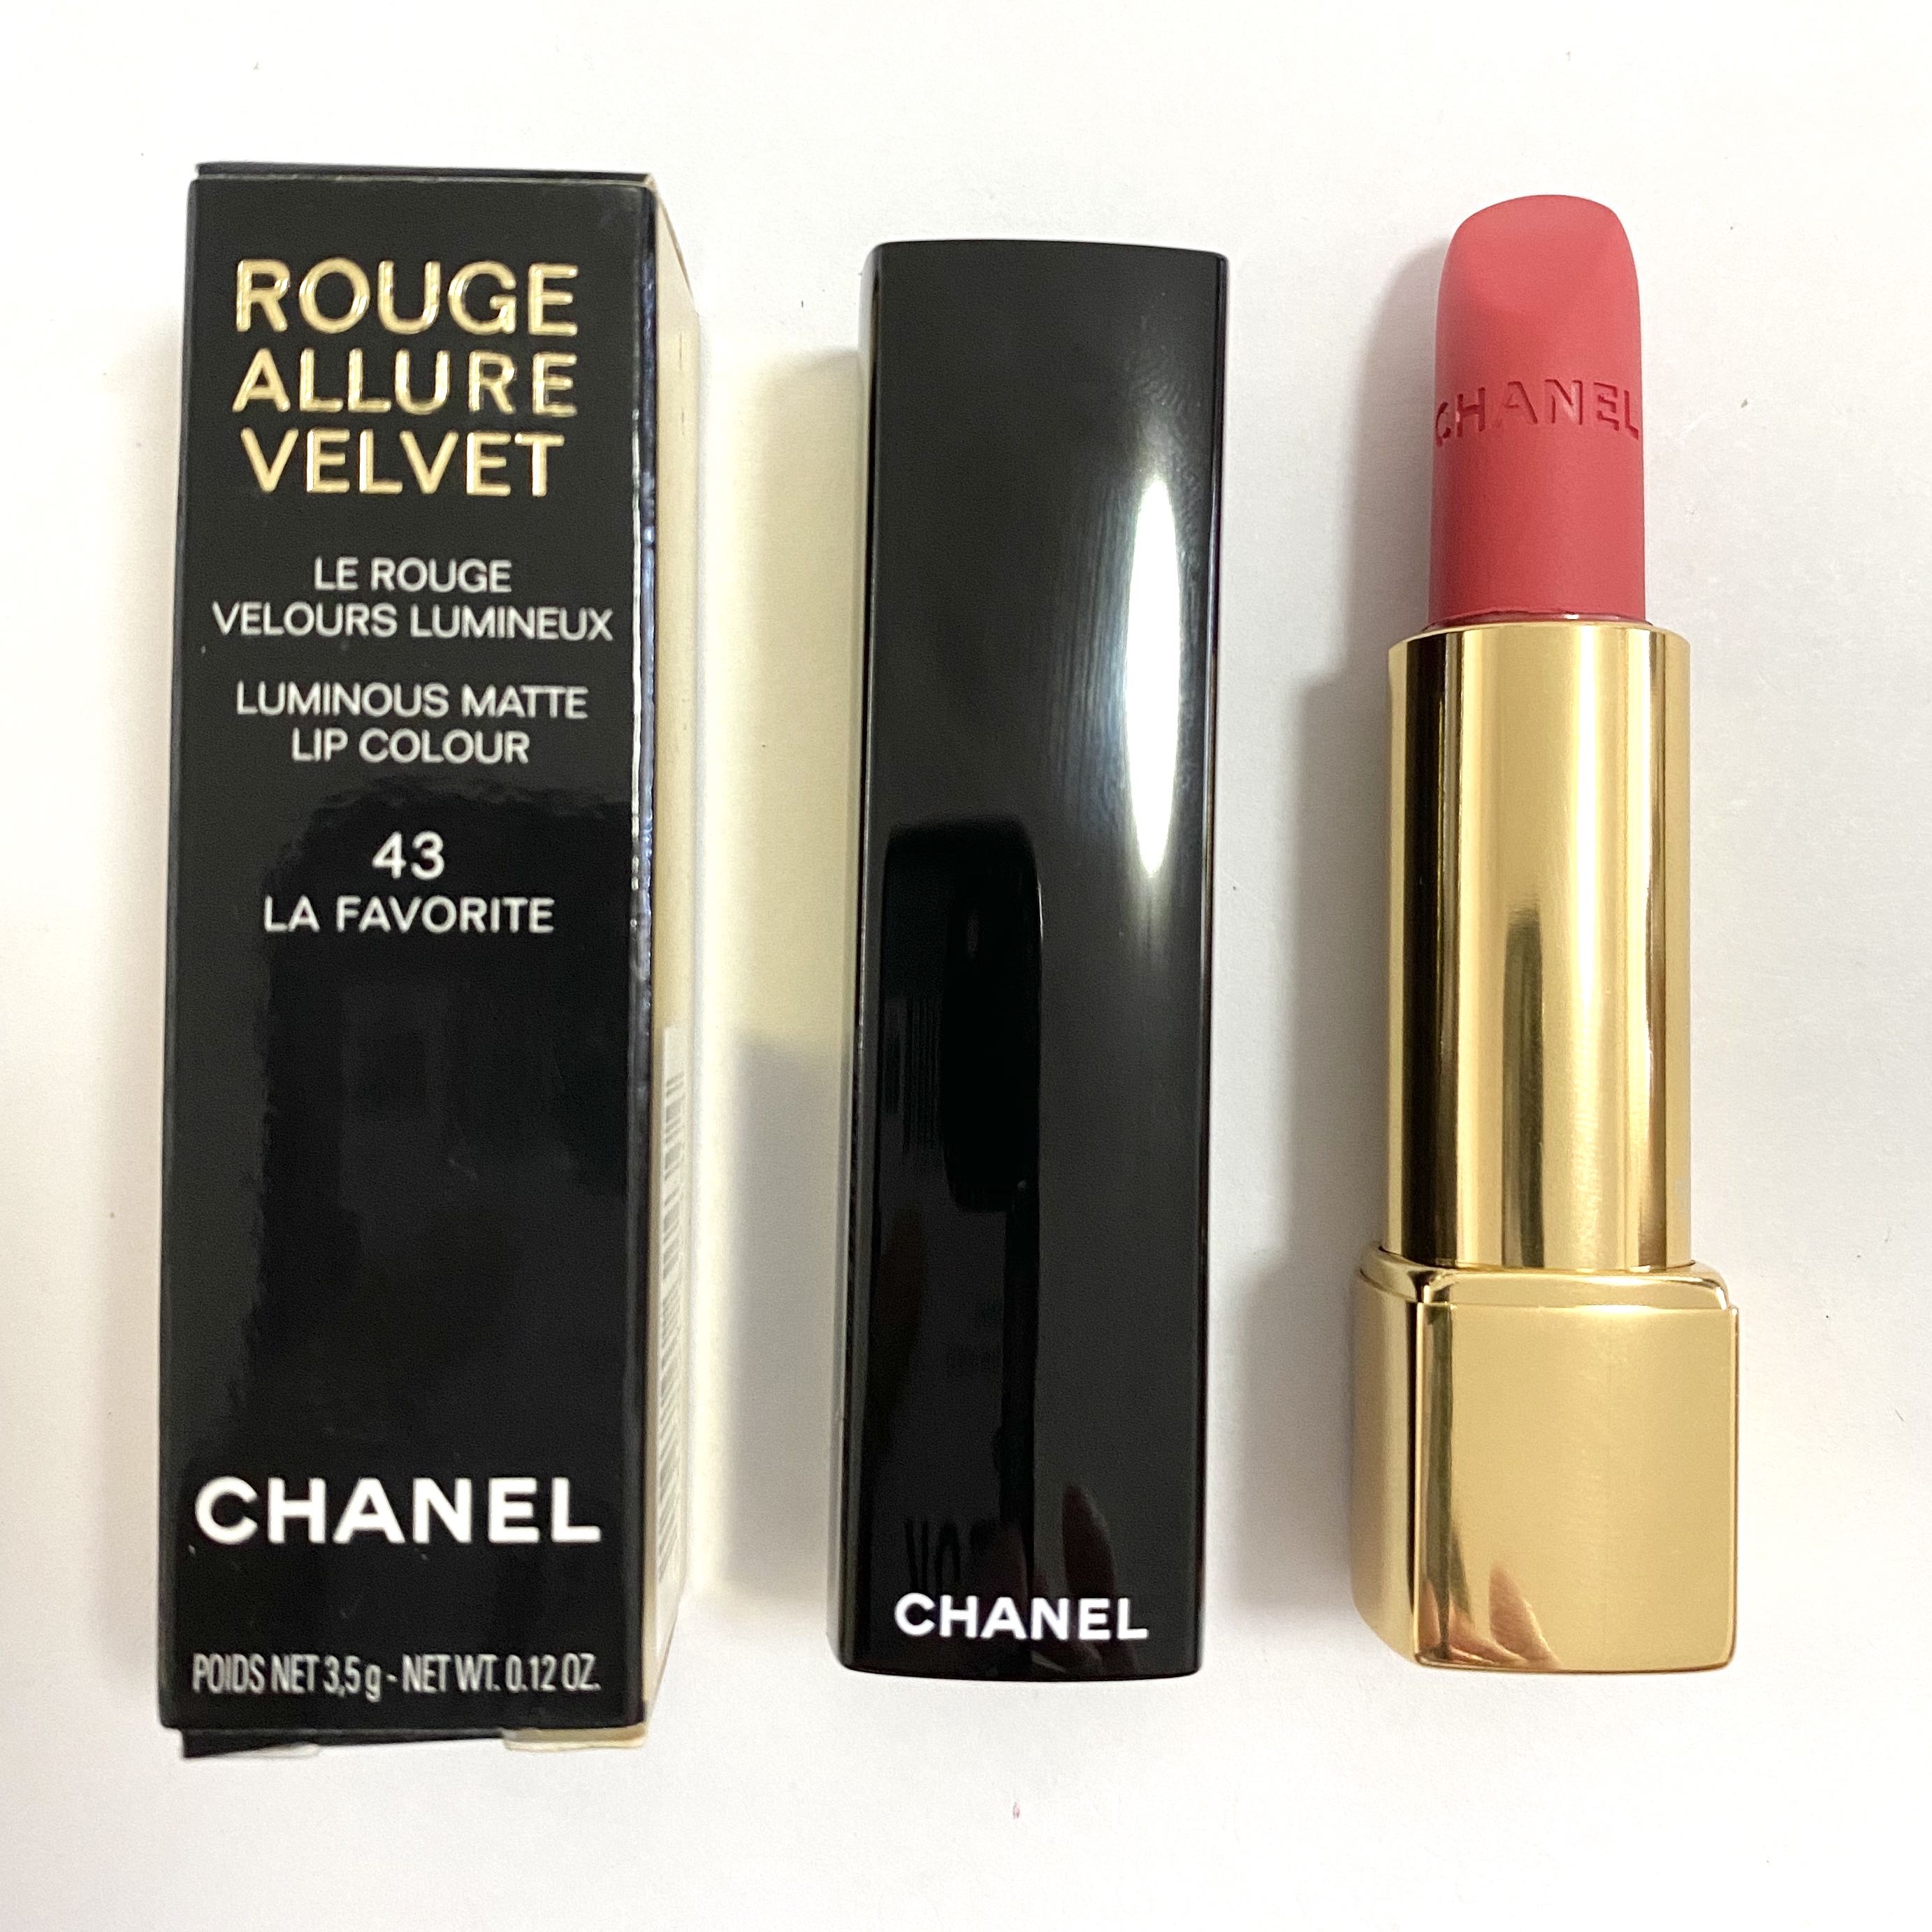 Chanel Rouge Allure Velvet Lipstick 43 “La Favorite”